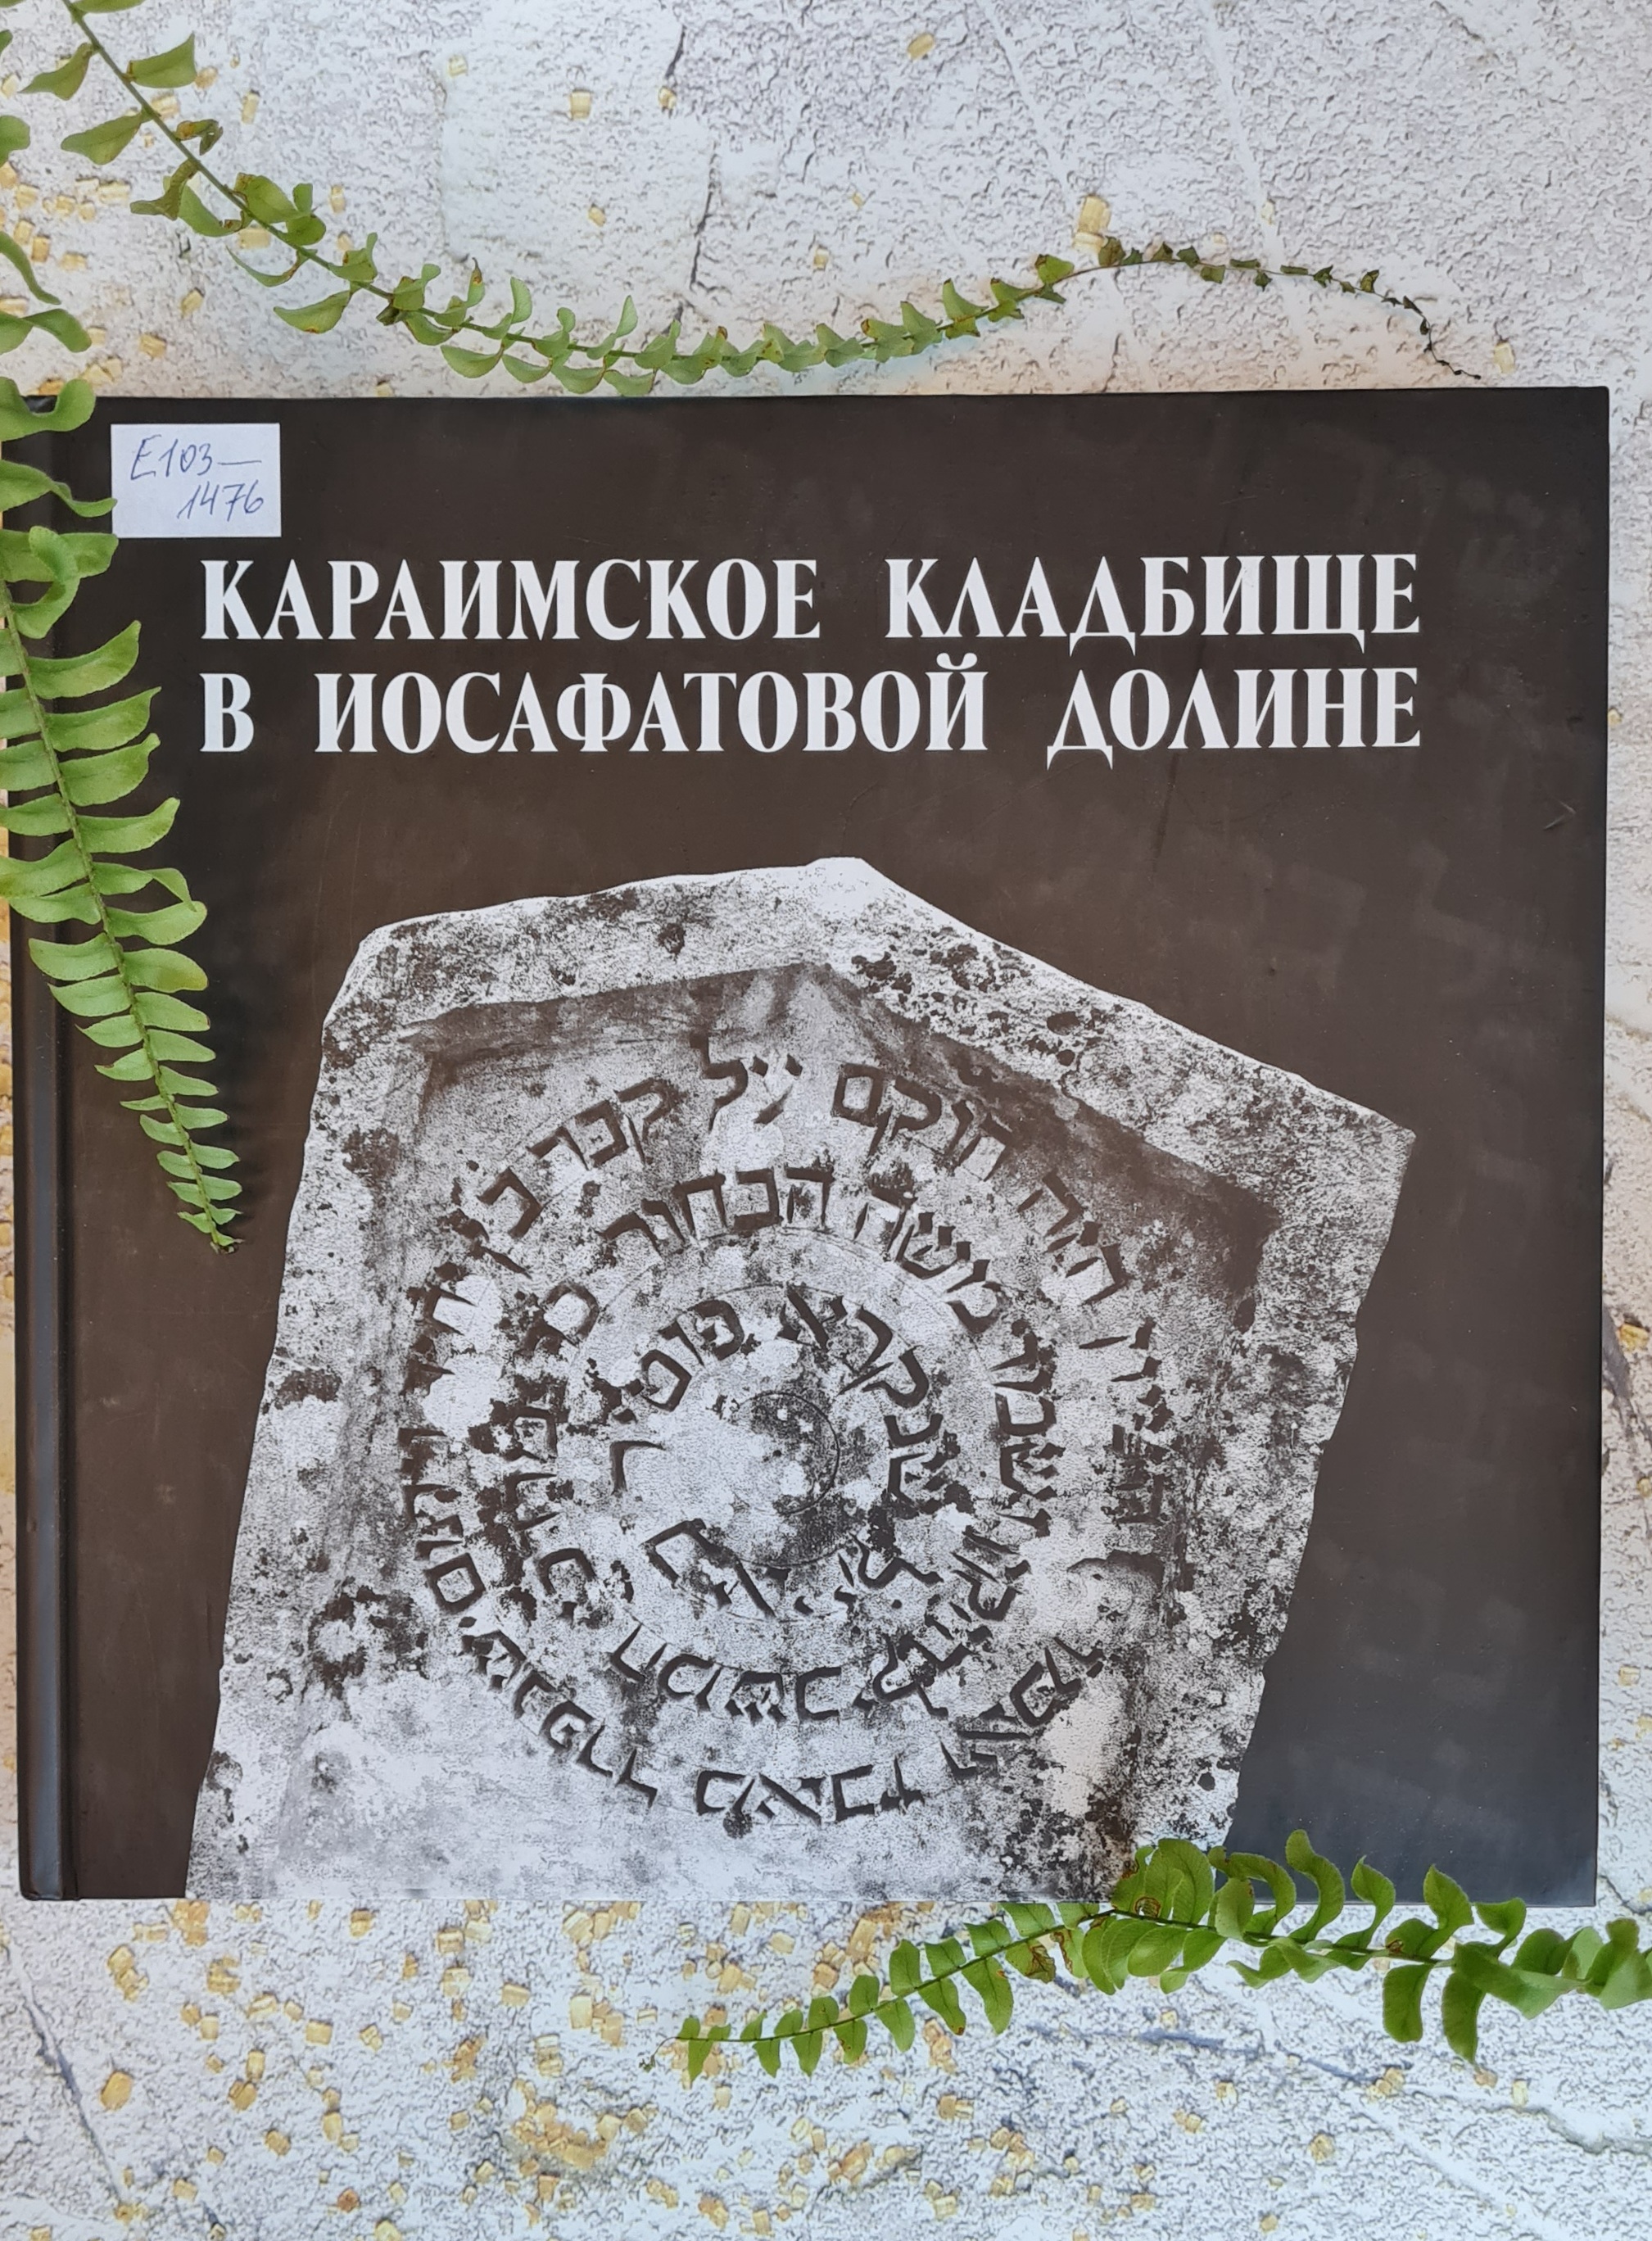 What to visit on vacation or a Karaite cemetery - My, Karaites, Crimea, Bakhchisarai, Chufut-Kale, Cemetery, Necropolis, Headstone, Judaism, Story, Antiquity, Old man, Historichka, Longpost, The photo